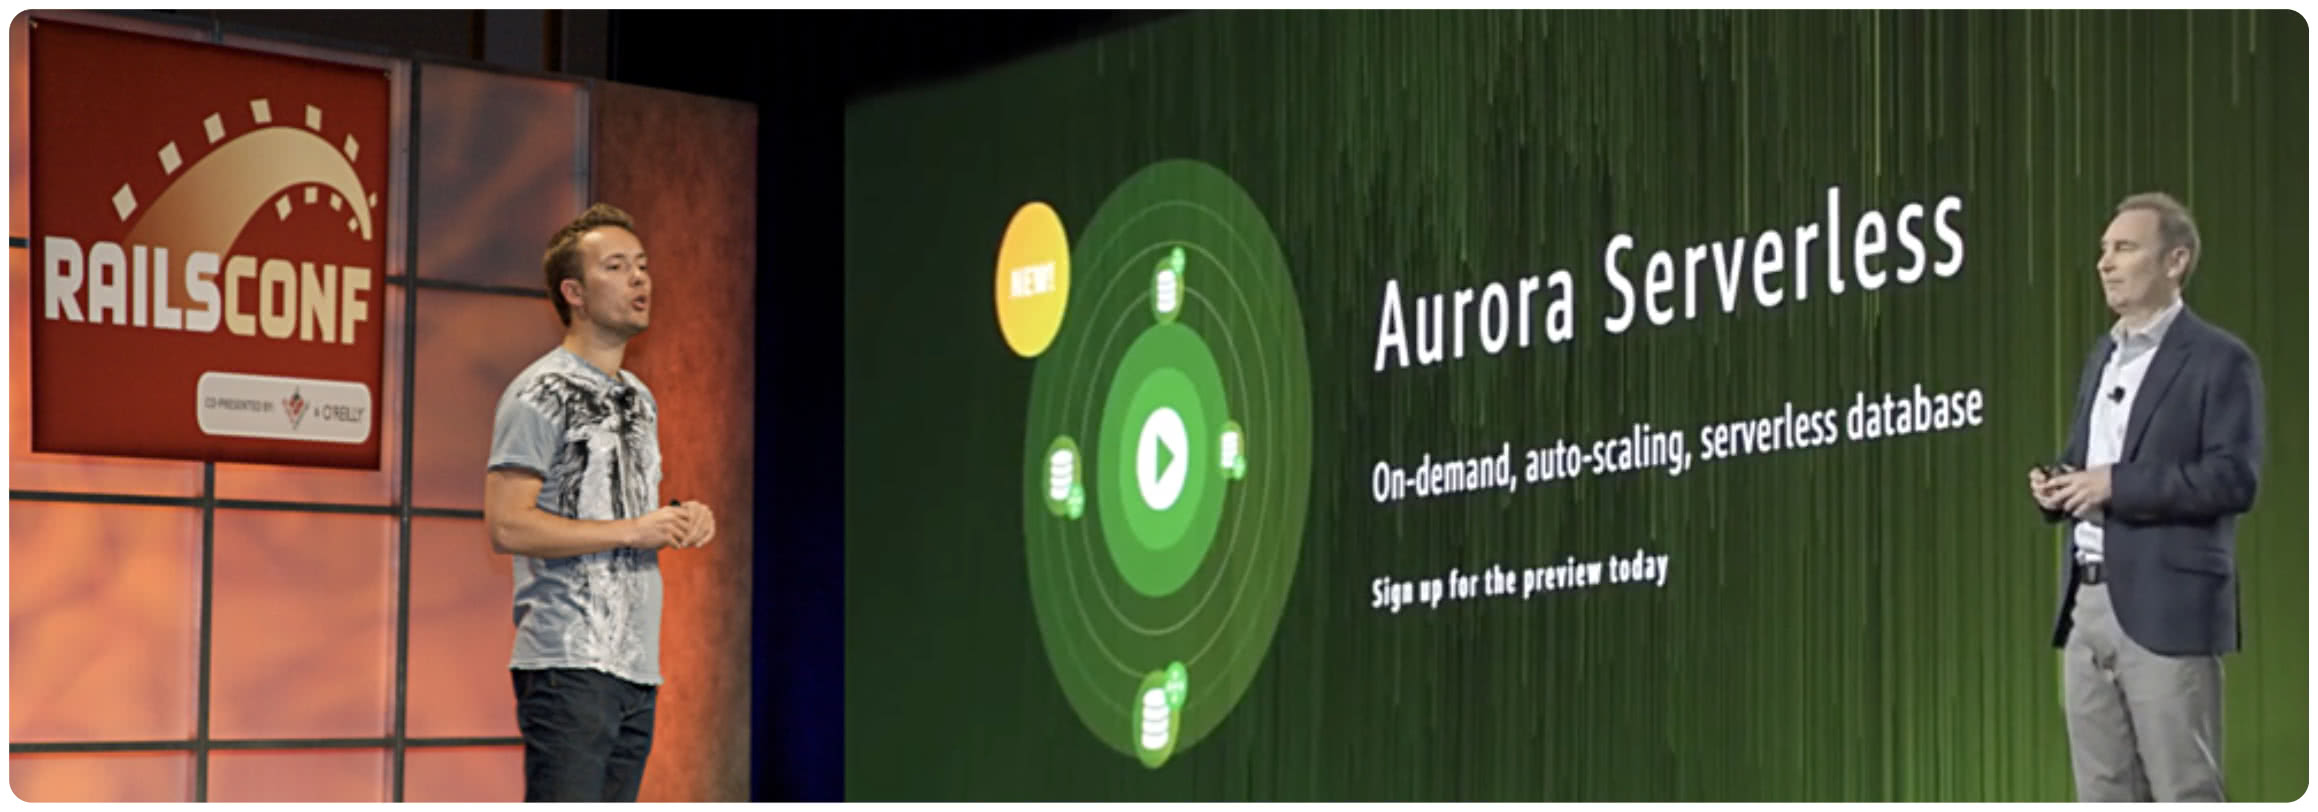 (right) AWS re:Invent 2017 - Amazon Aurora Serverless